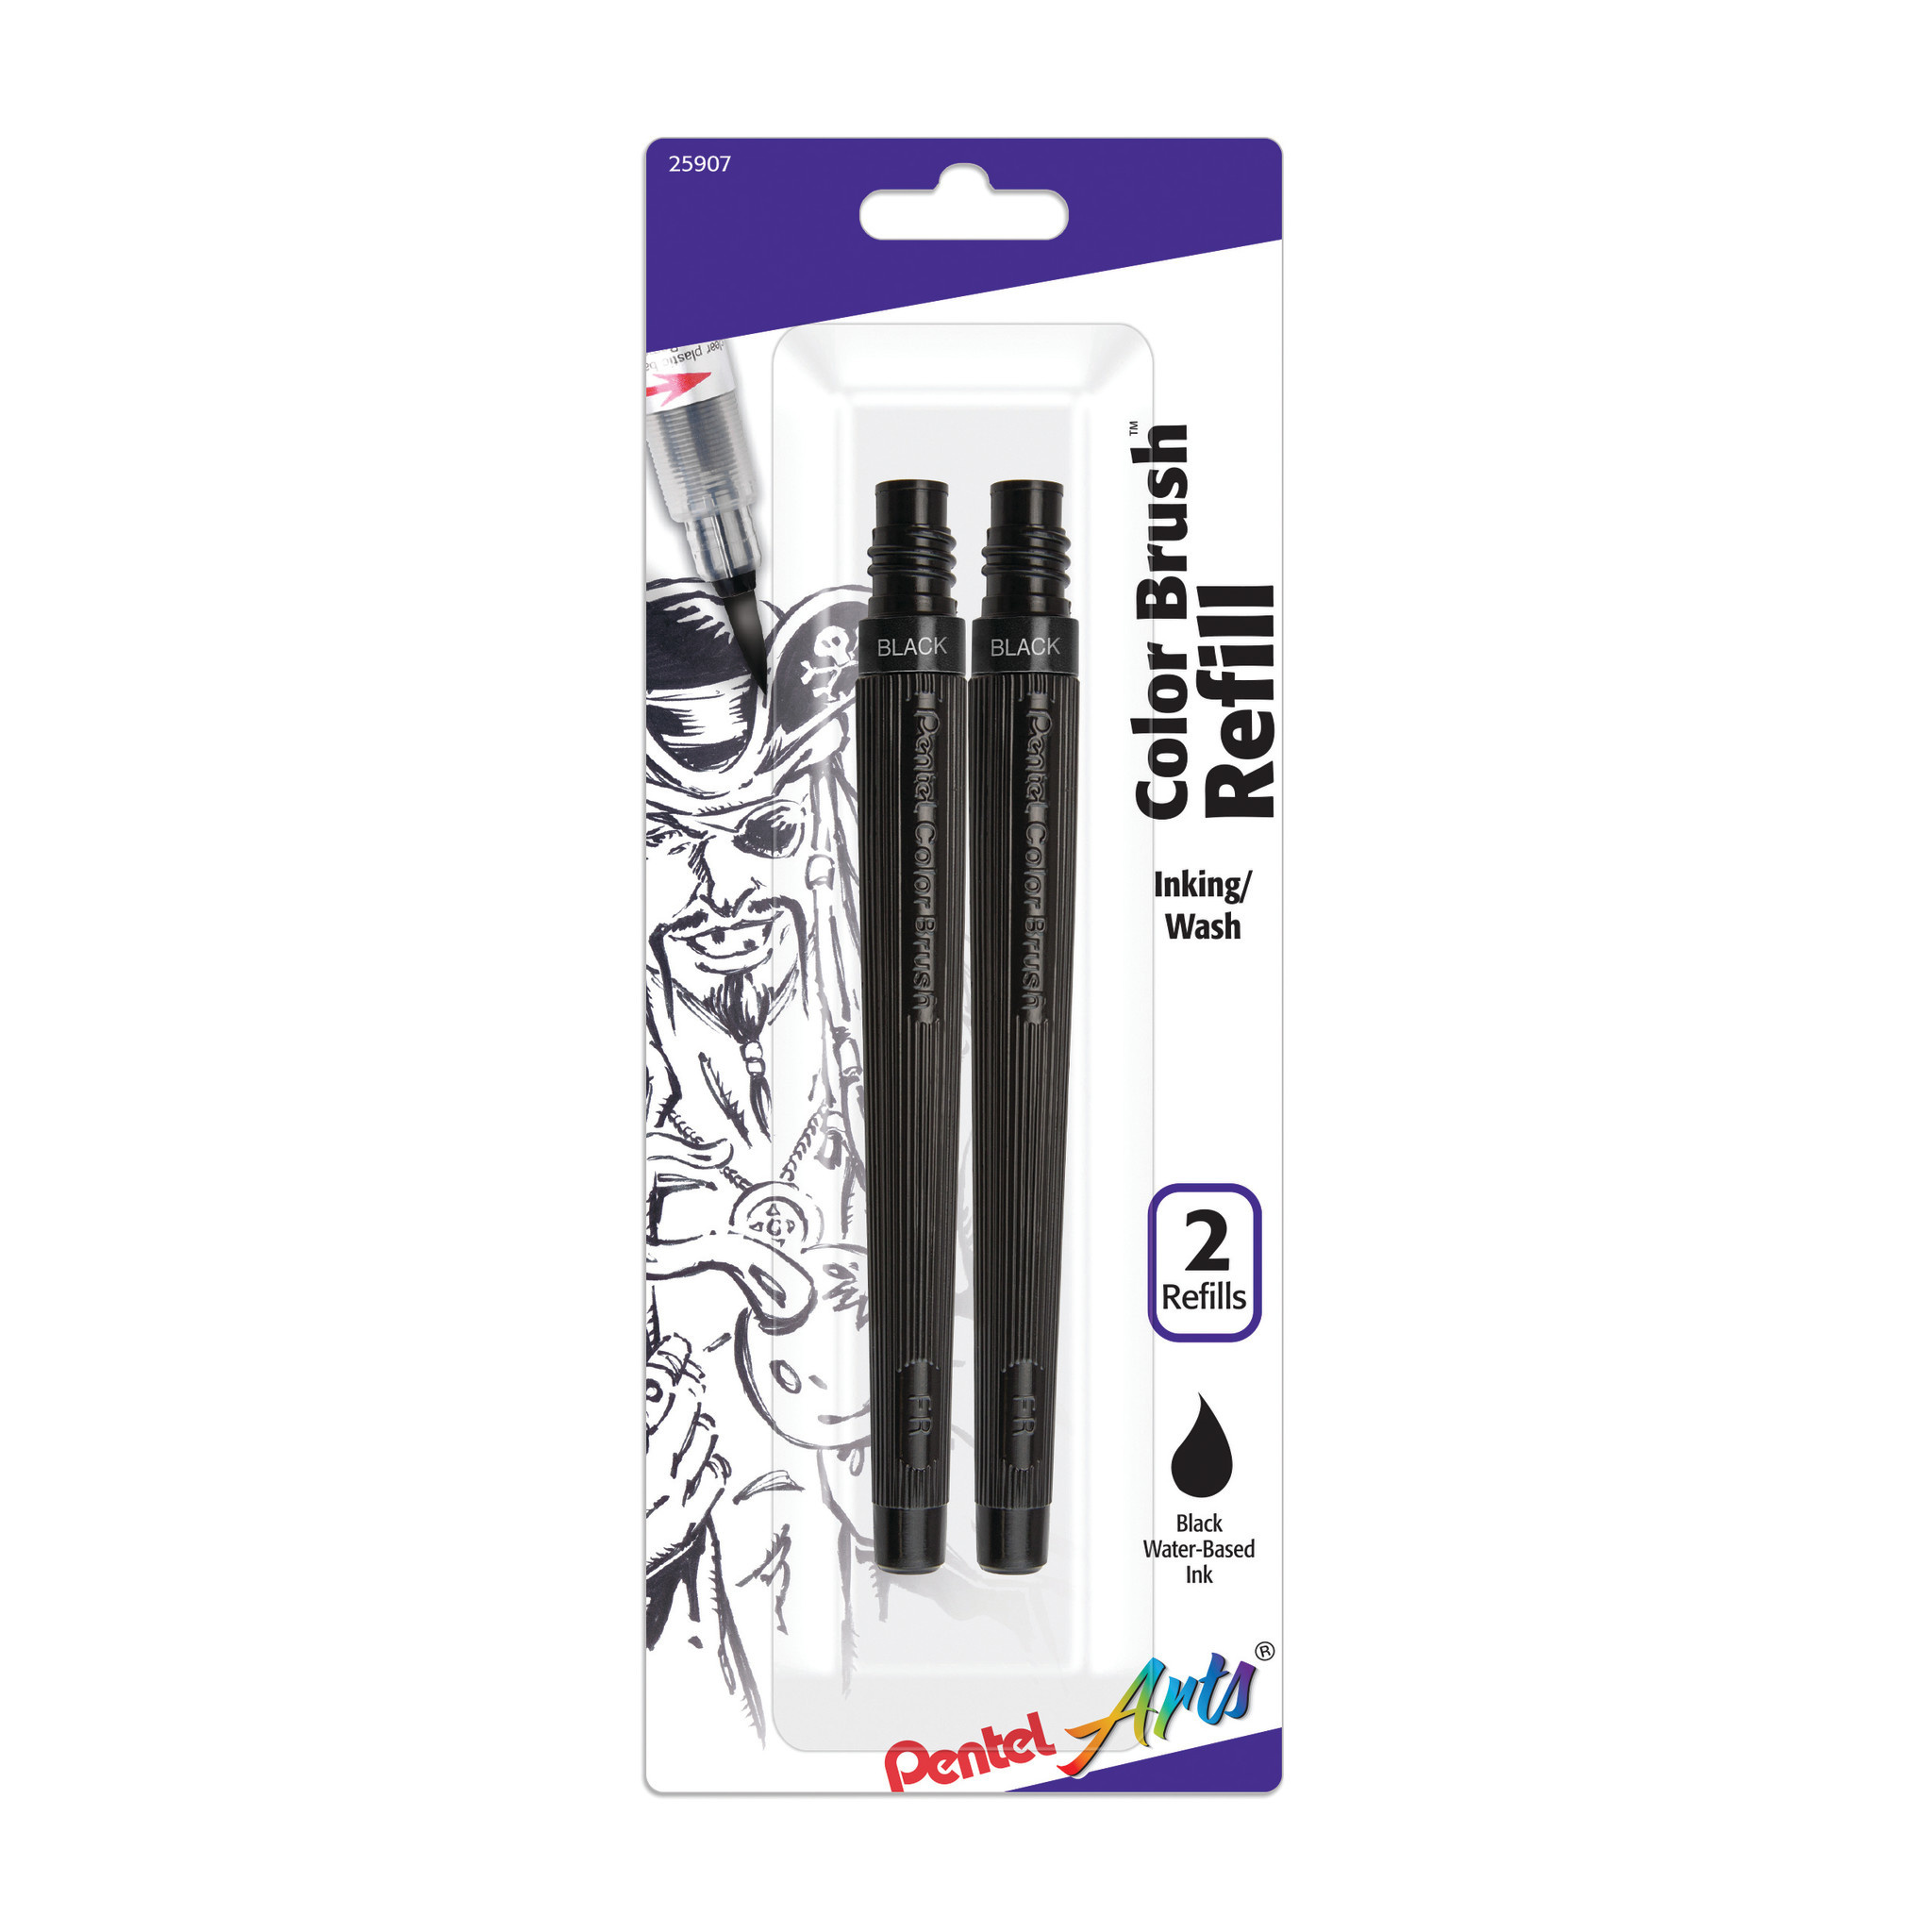 Pentel Color Brush Pen - RISD Store